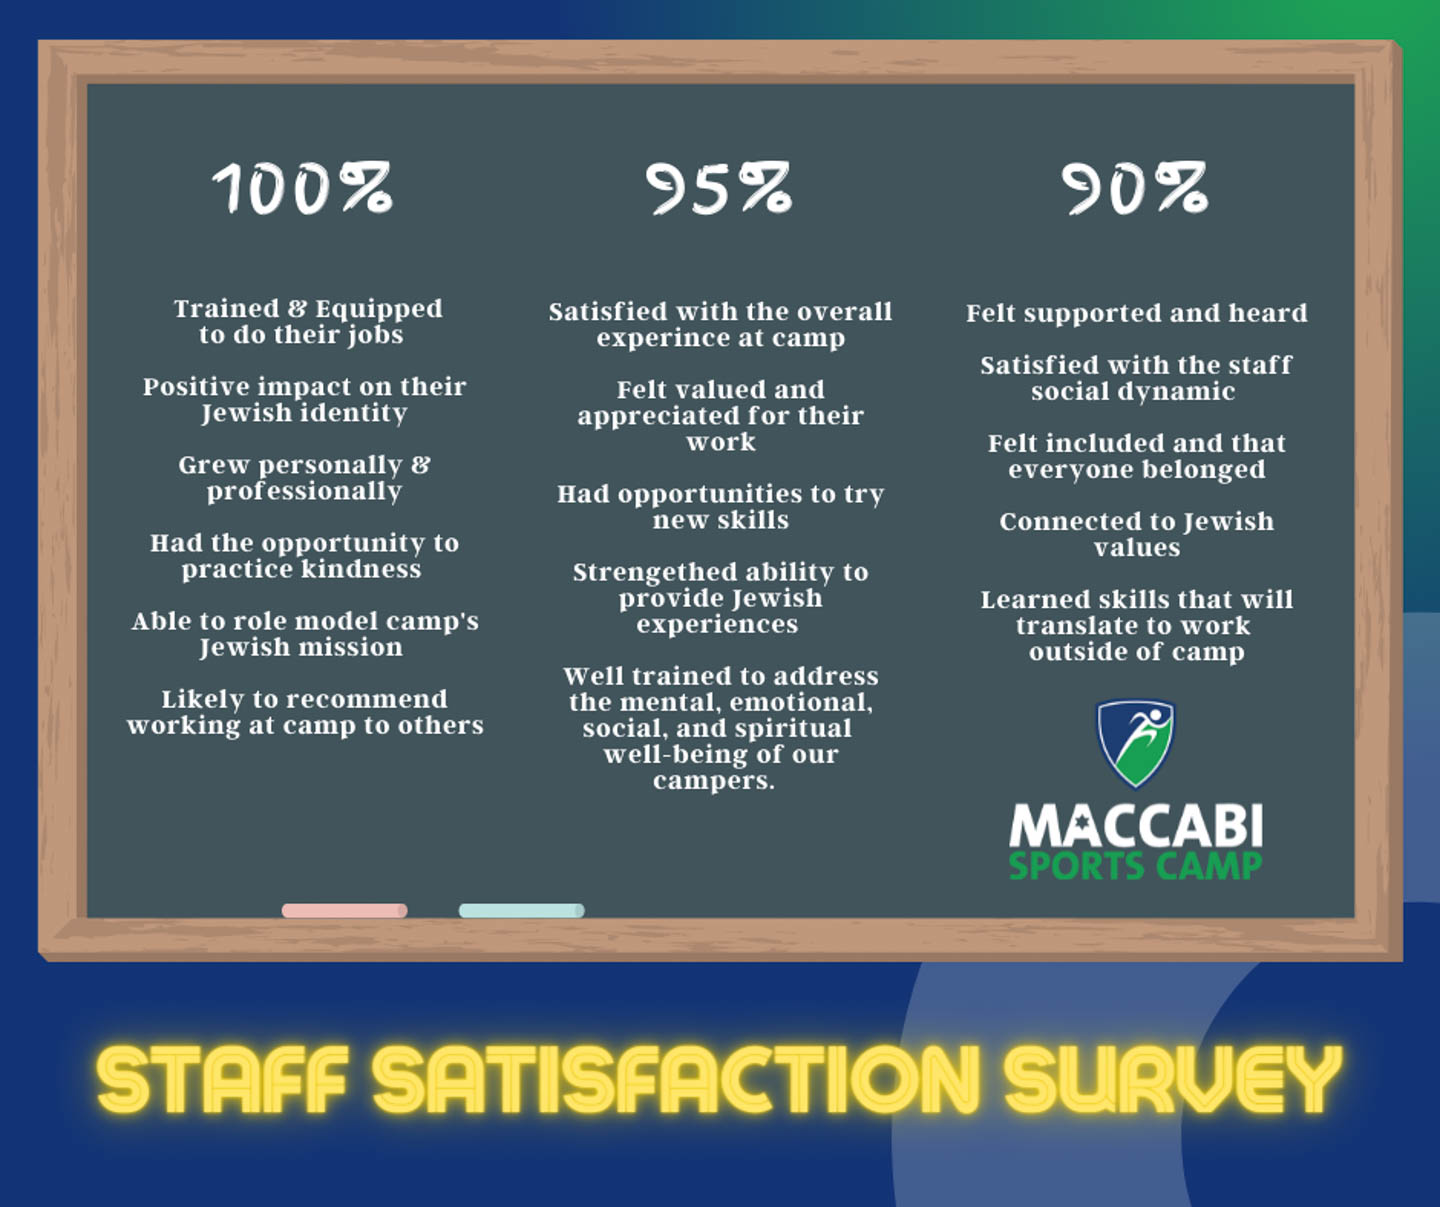 Staff survey results.